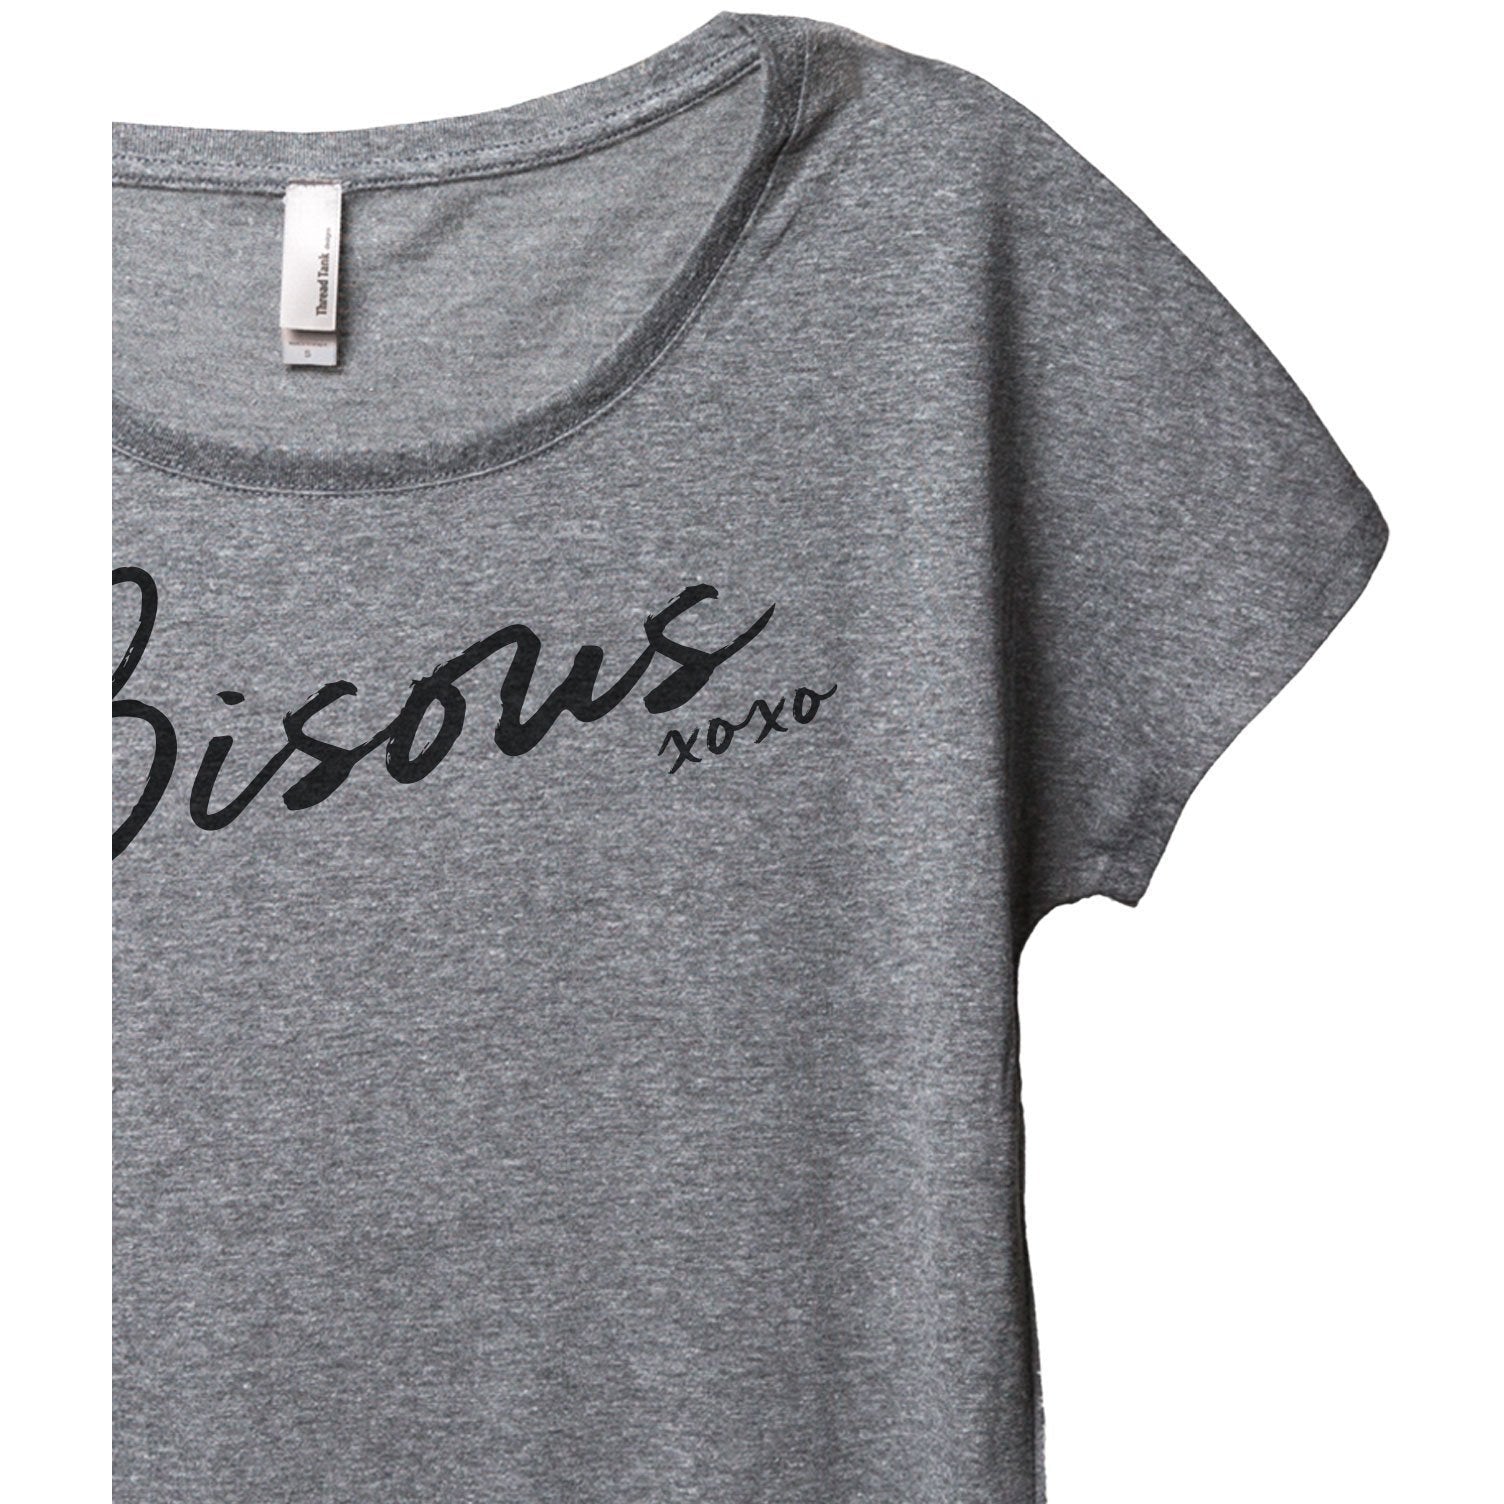 Bisous XOXO Women's Relaxed Slouchy Dolman T-Shirt Tee Heather Grey Closeup Details
